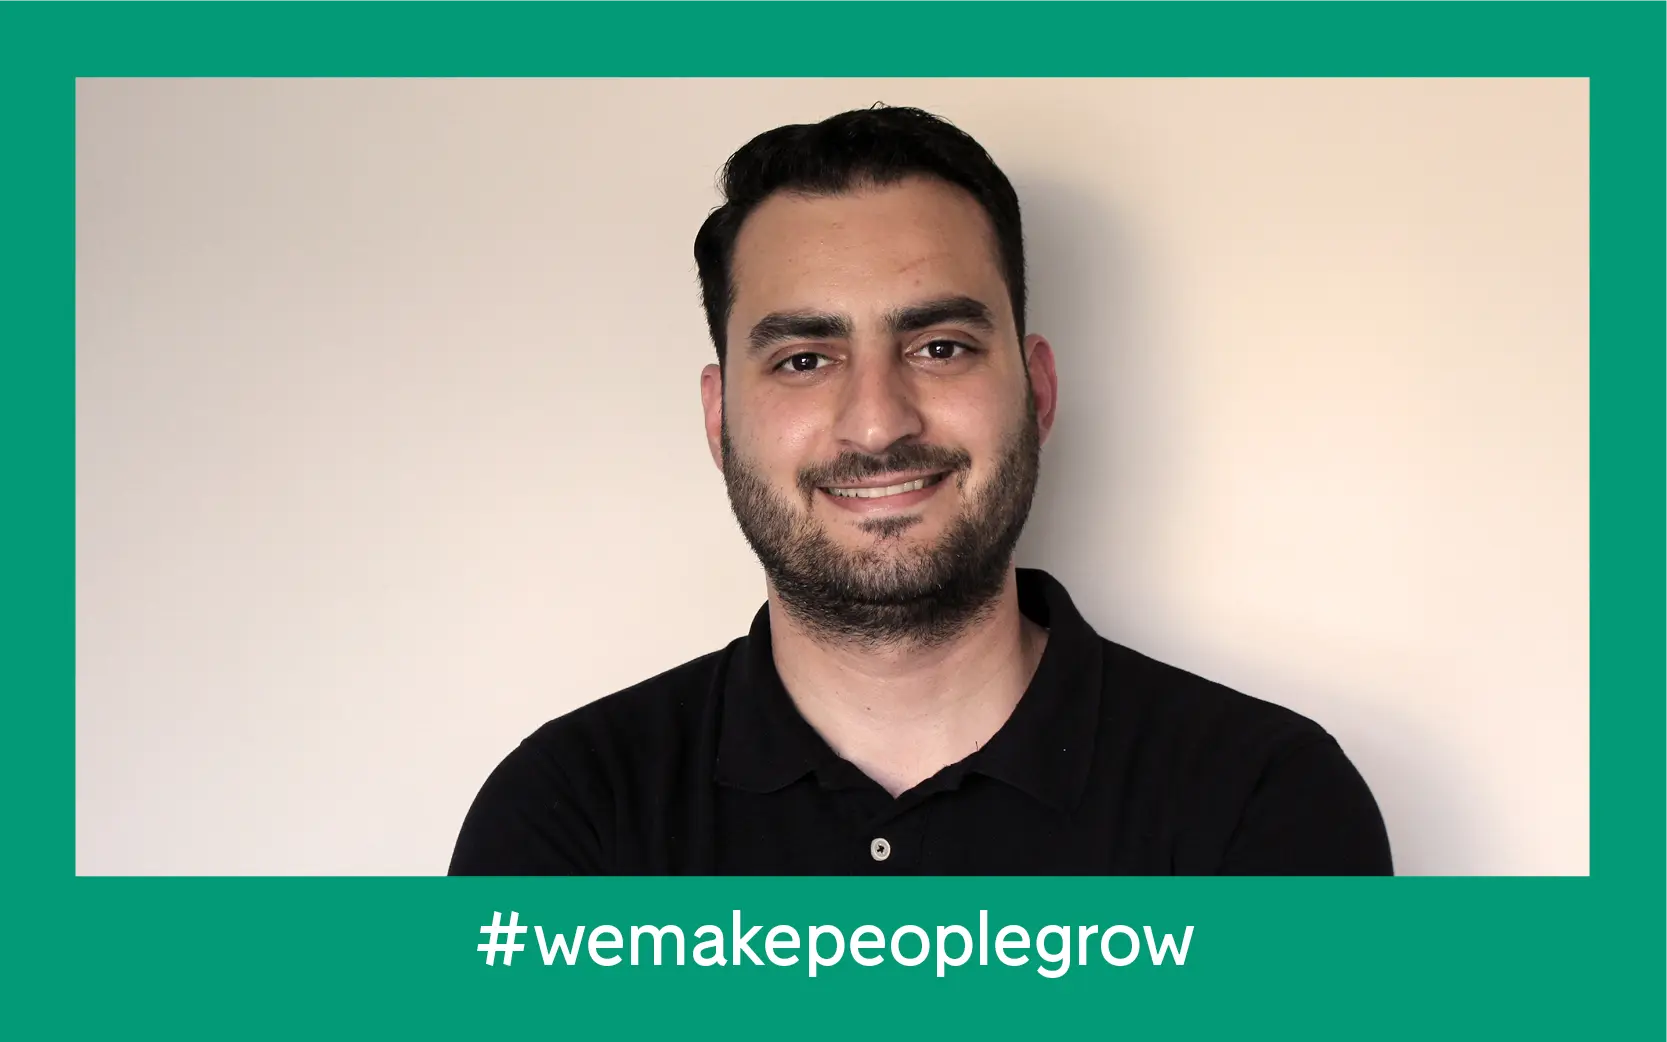 Ahmed dia Jeber We make people grow